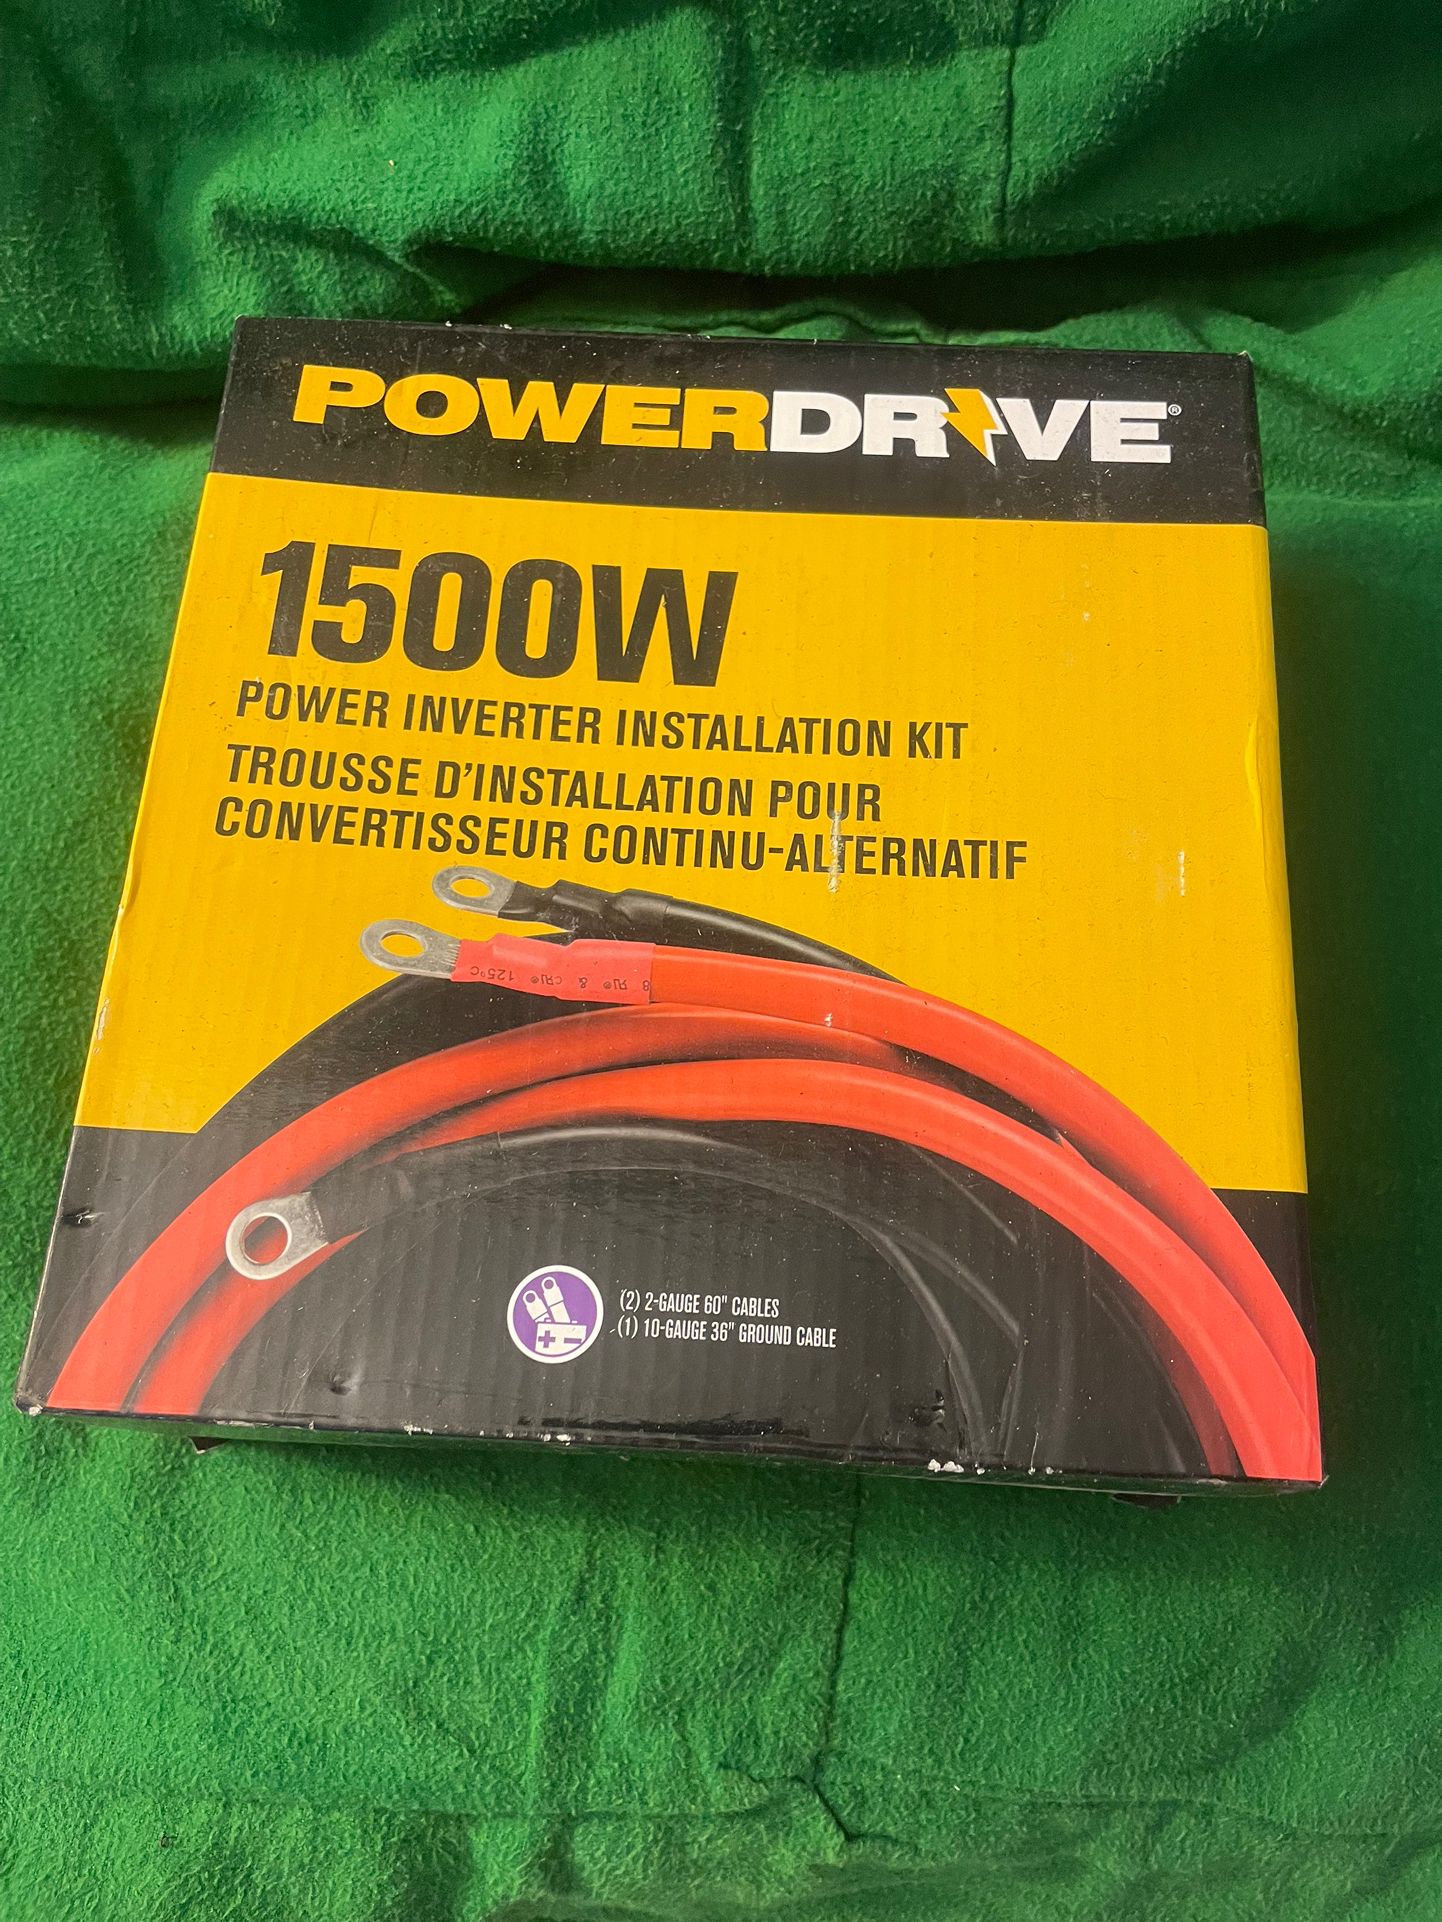 1500W PowerDrive Inveter Instilation Kit. Great For OTR Truckers